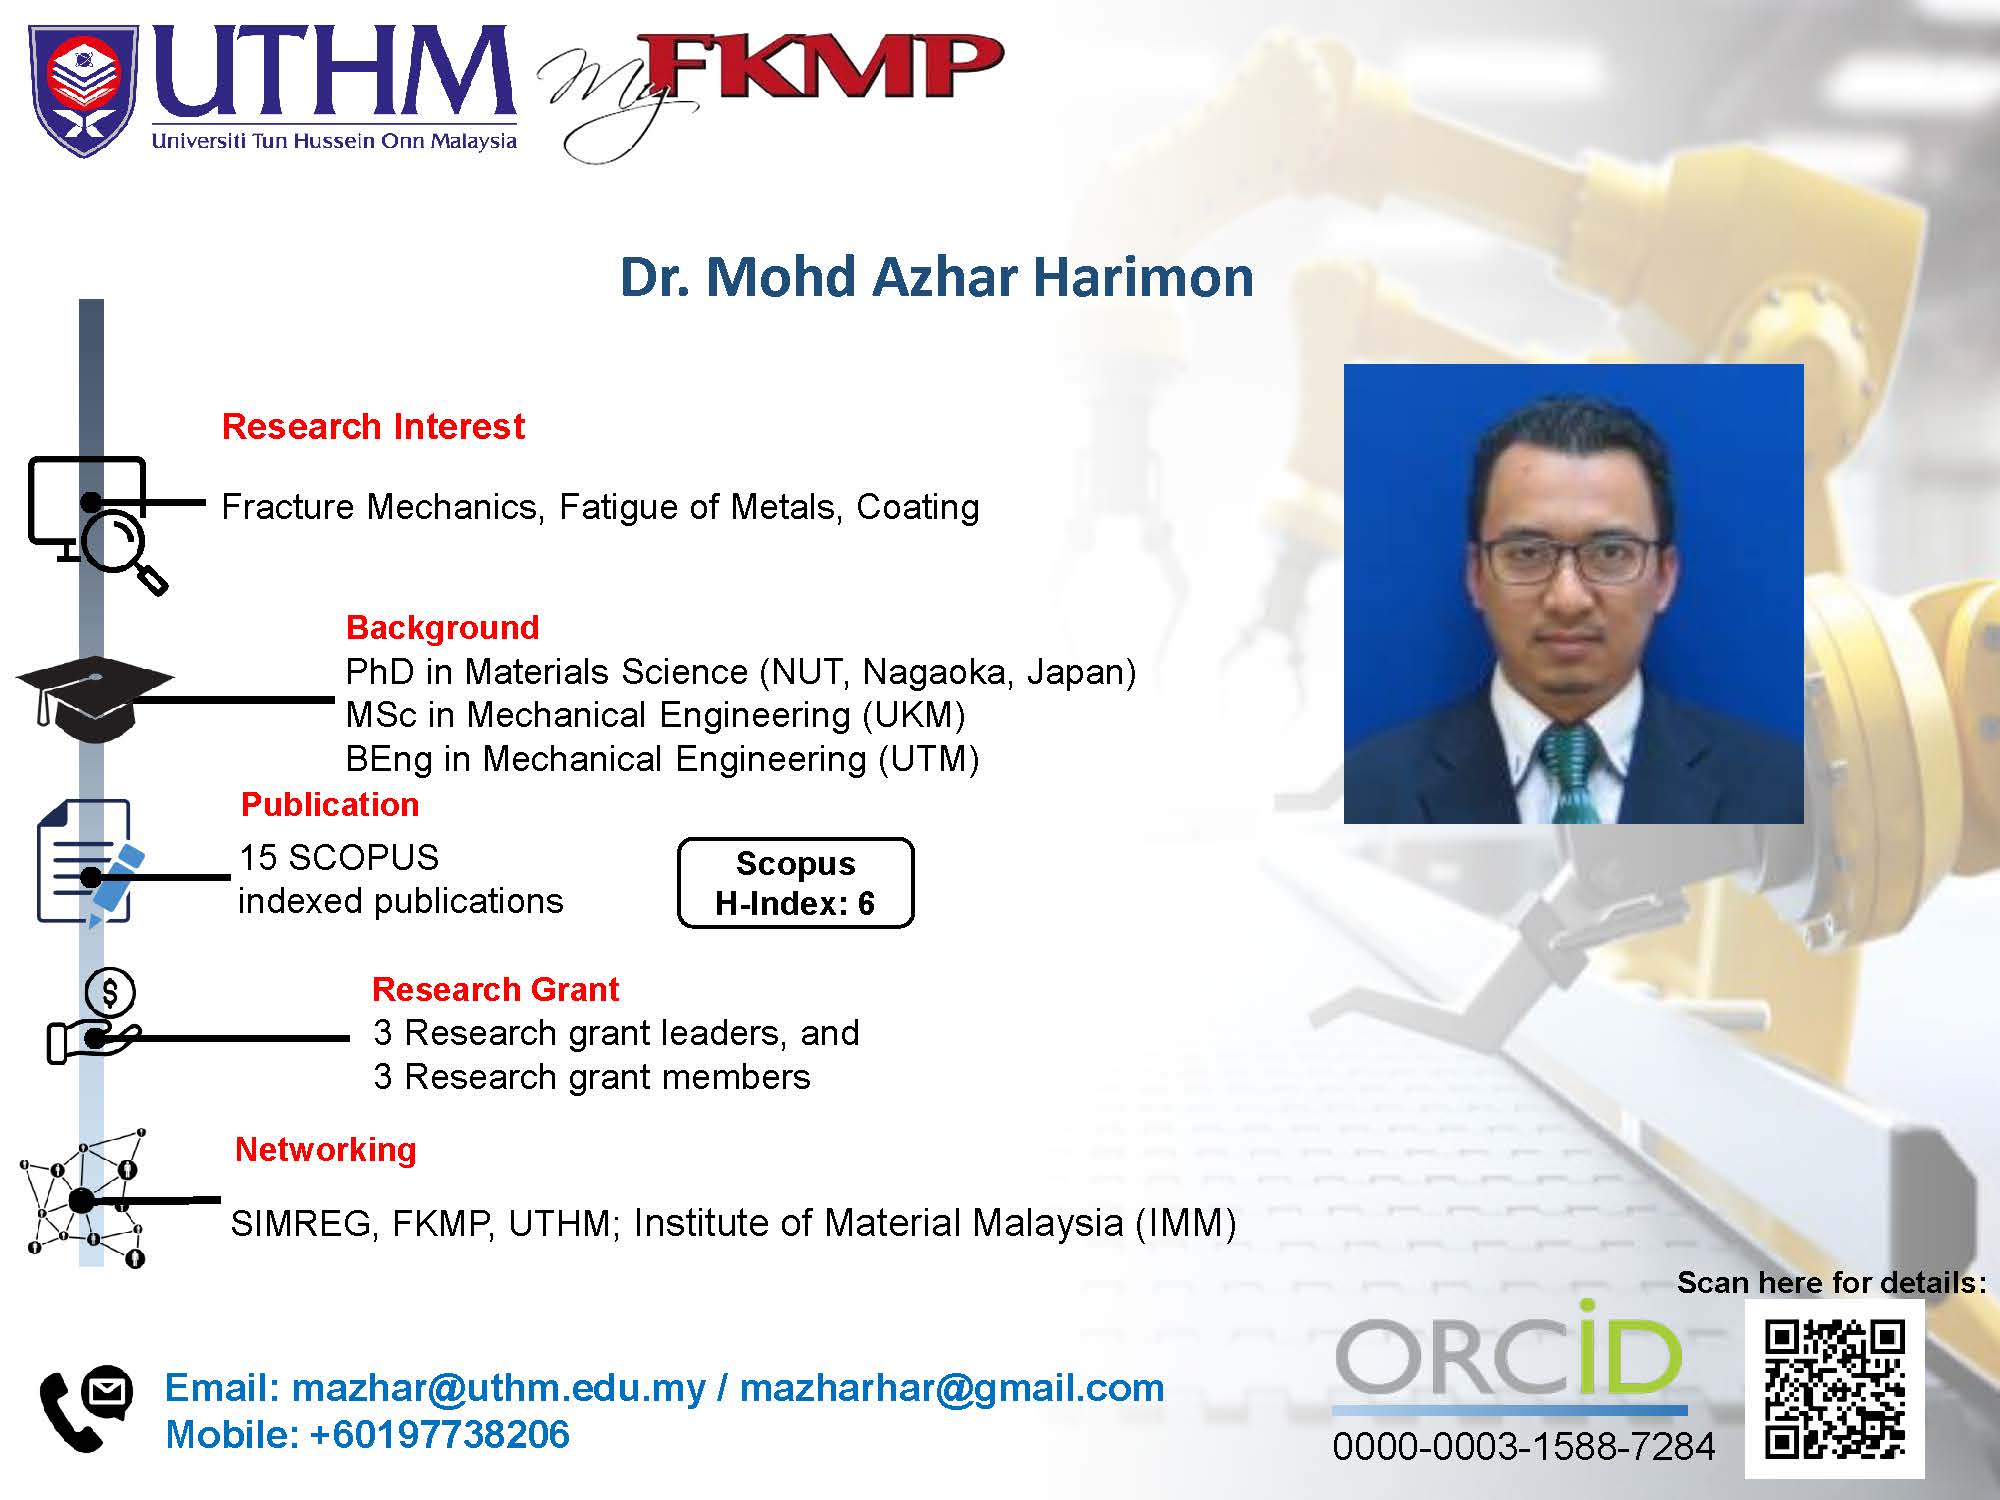 Dr. Mohd Azhar Harimon